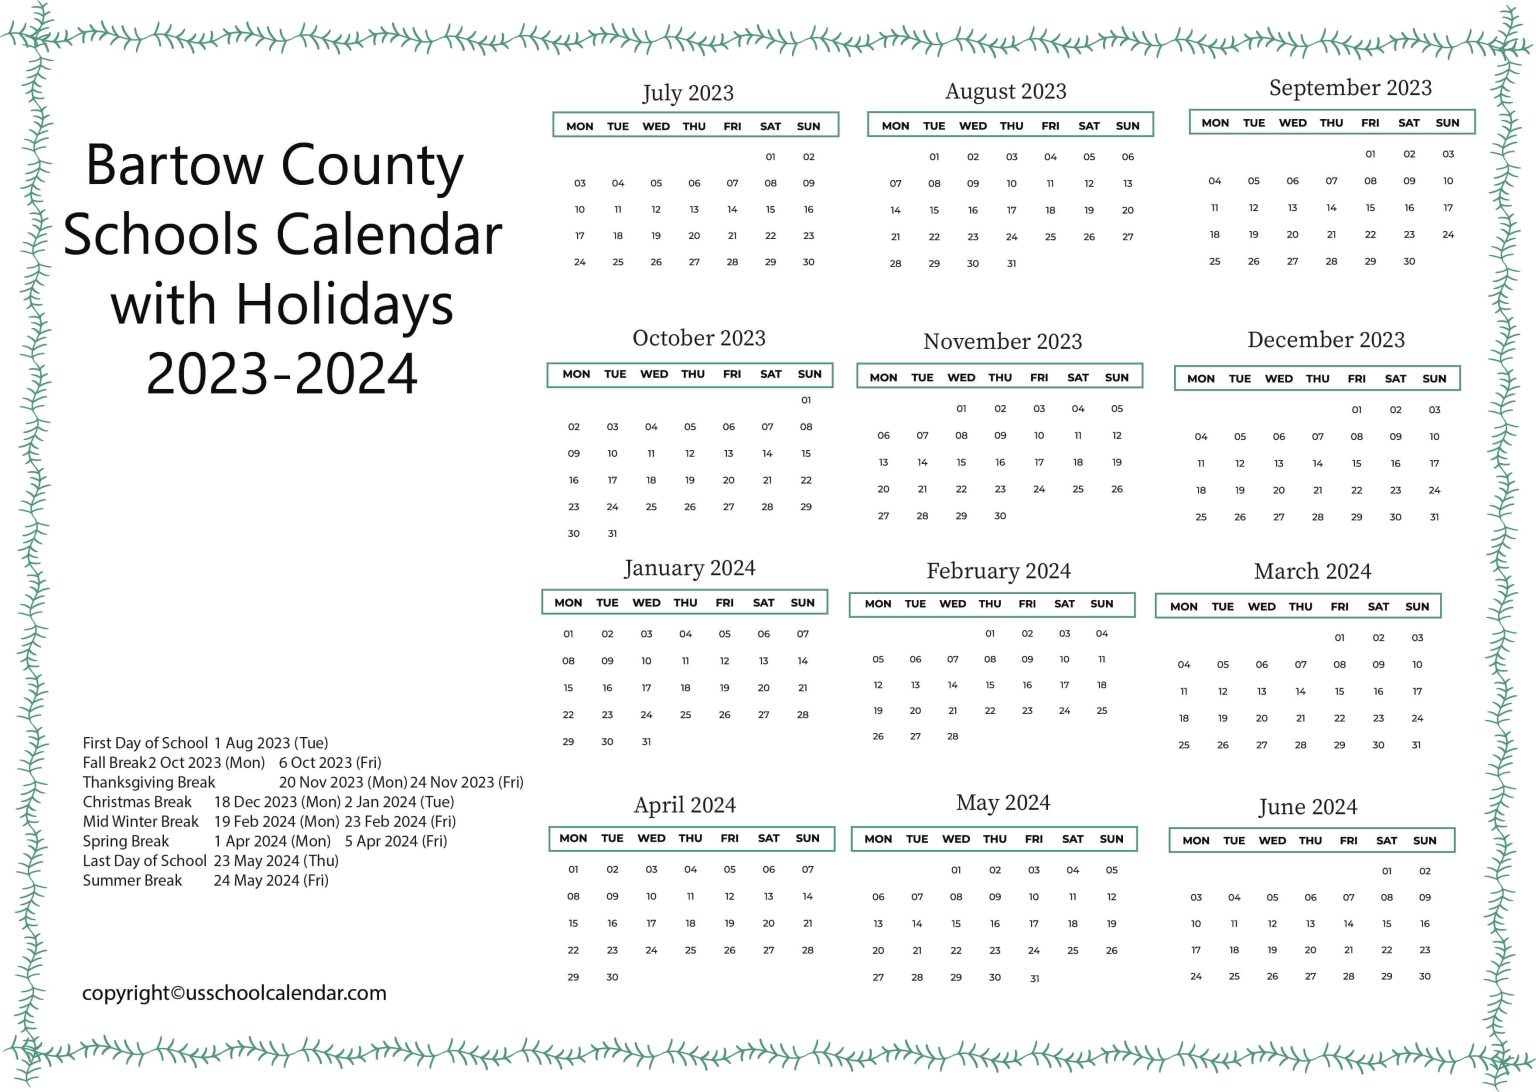 bartow-county-schools-calendar-with-holidays-2023-2024